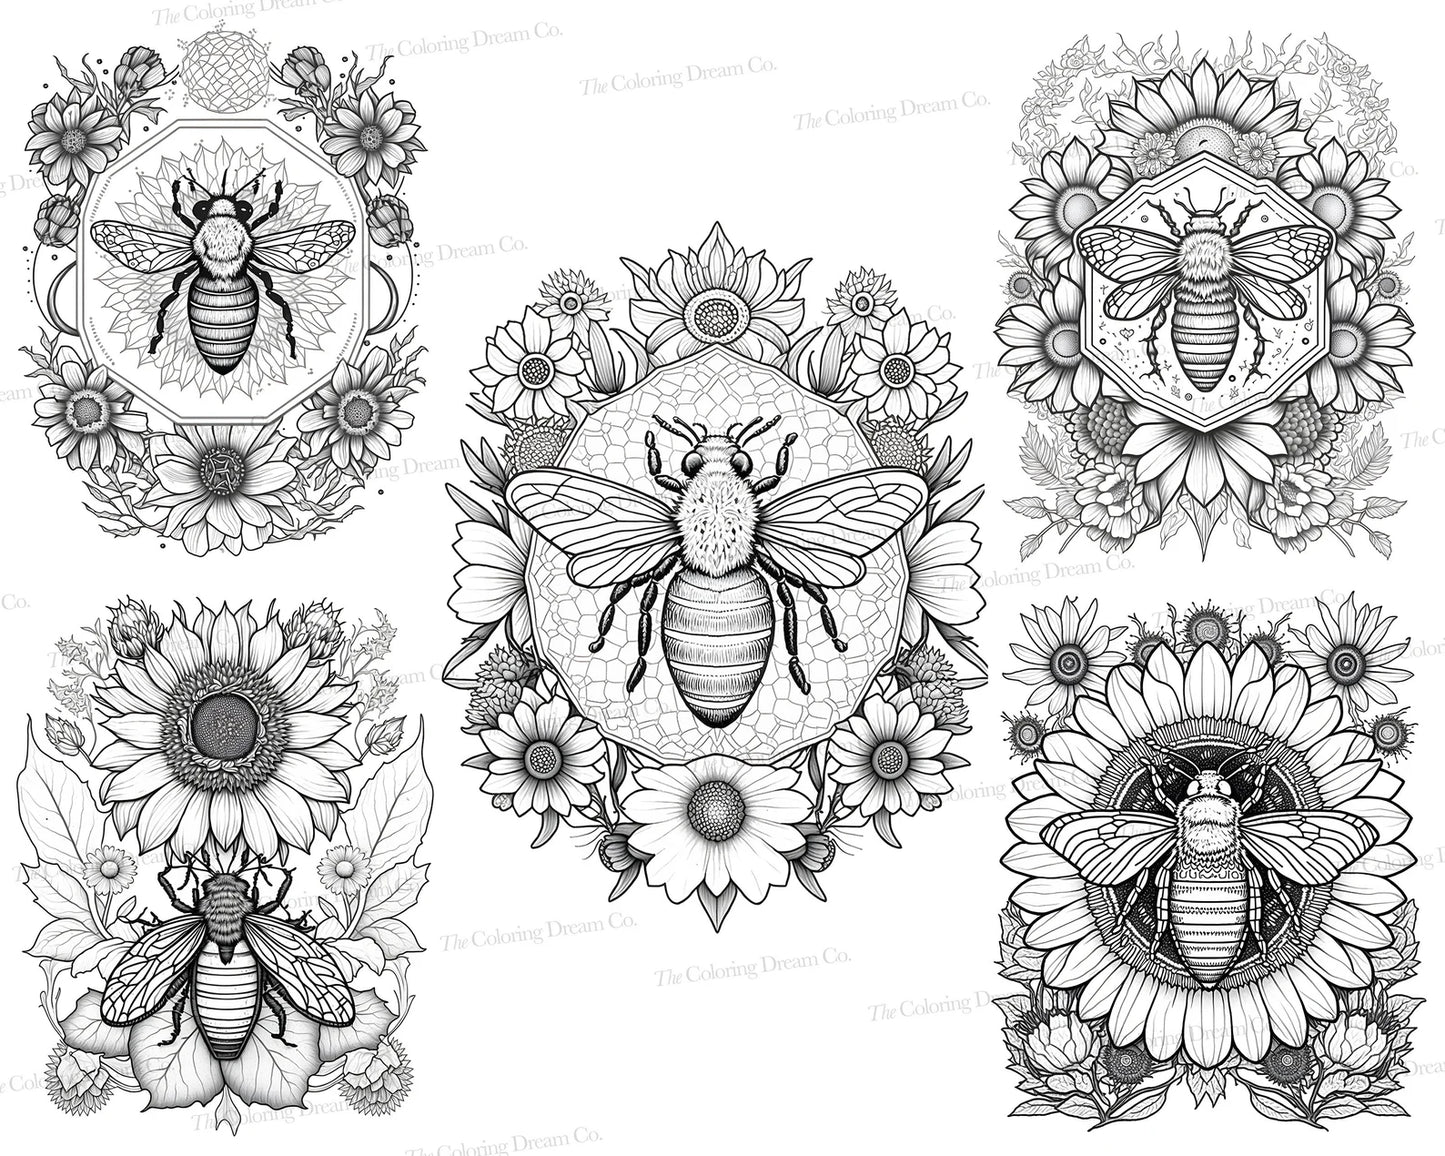 Bumblebee Mandala Coloring Book, Sunflower, Printable Coloring Pages, Printable PDF